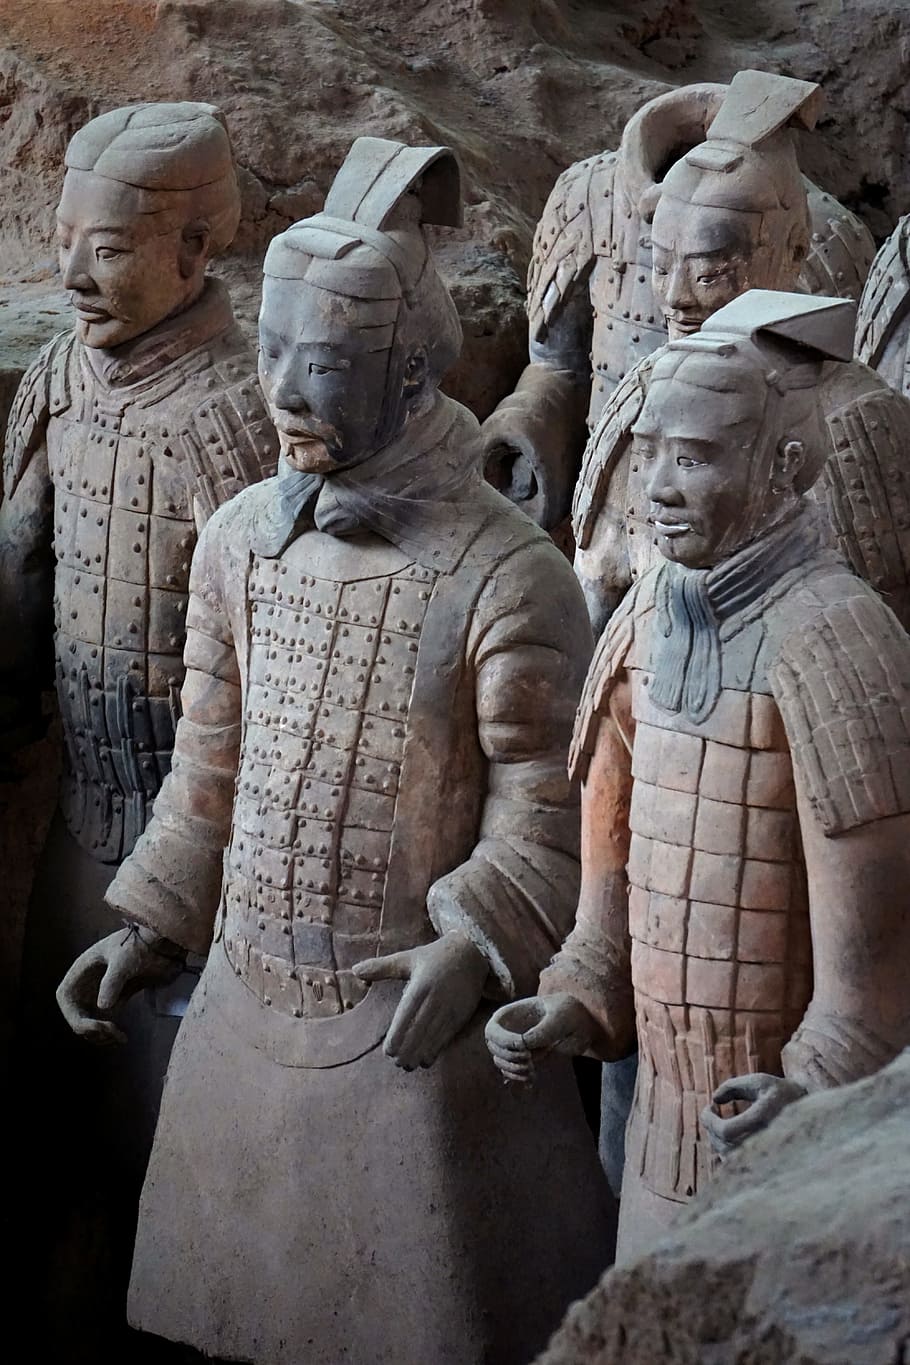 terracotta army, terracotta warriors, terracotta, xi'an, china, sculpture, representation, human representation, art and craft, statue